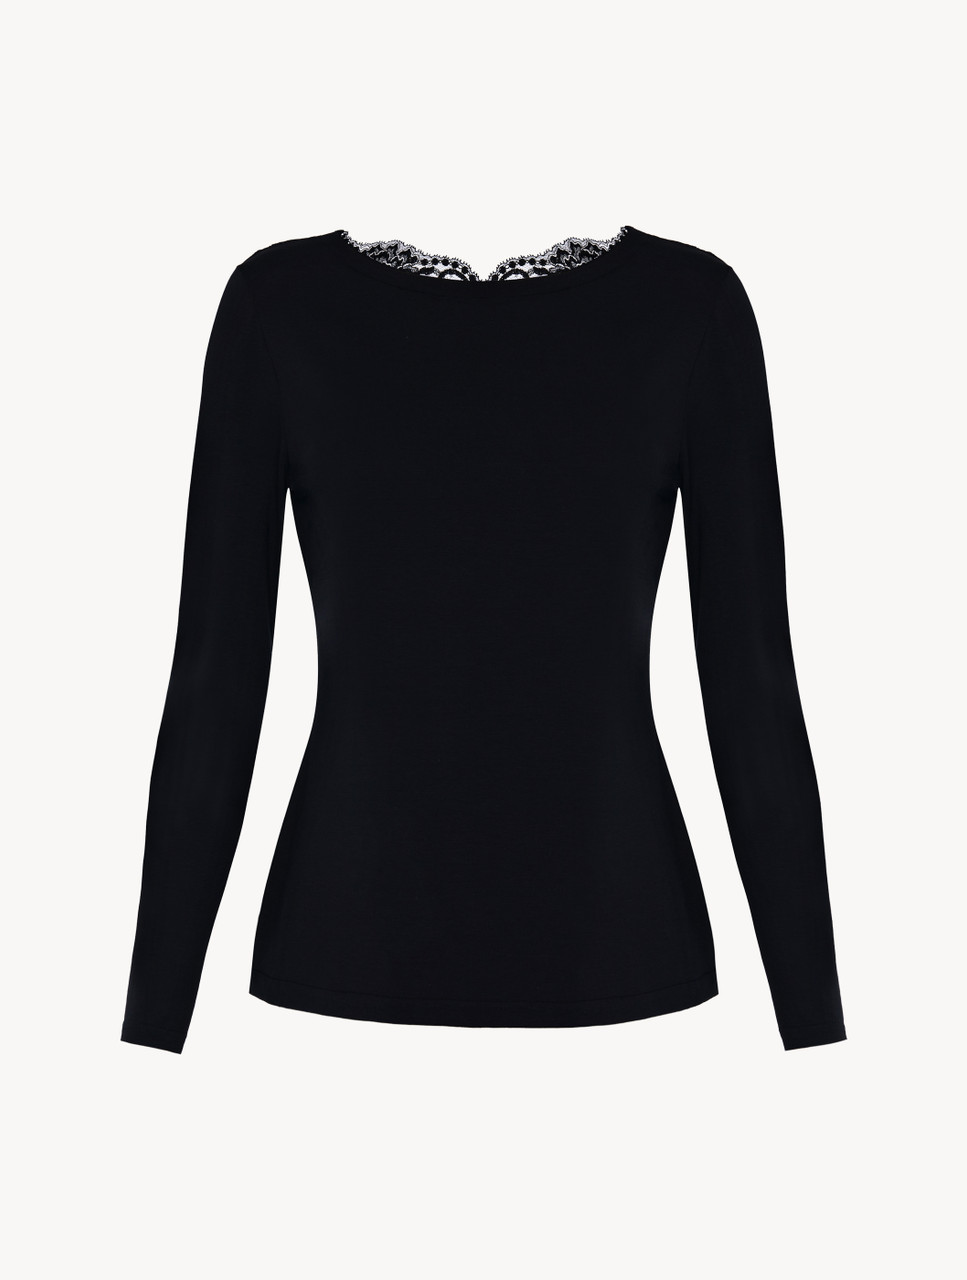 Luxury Cotton Long-Sleeved Top in Black